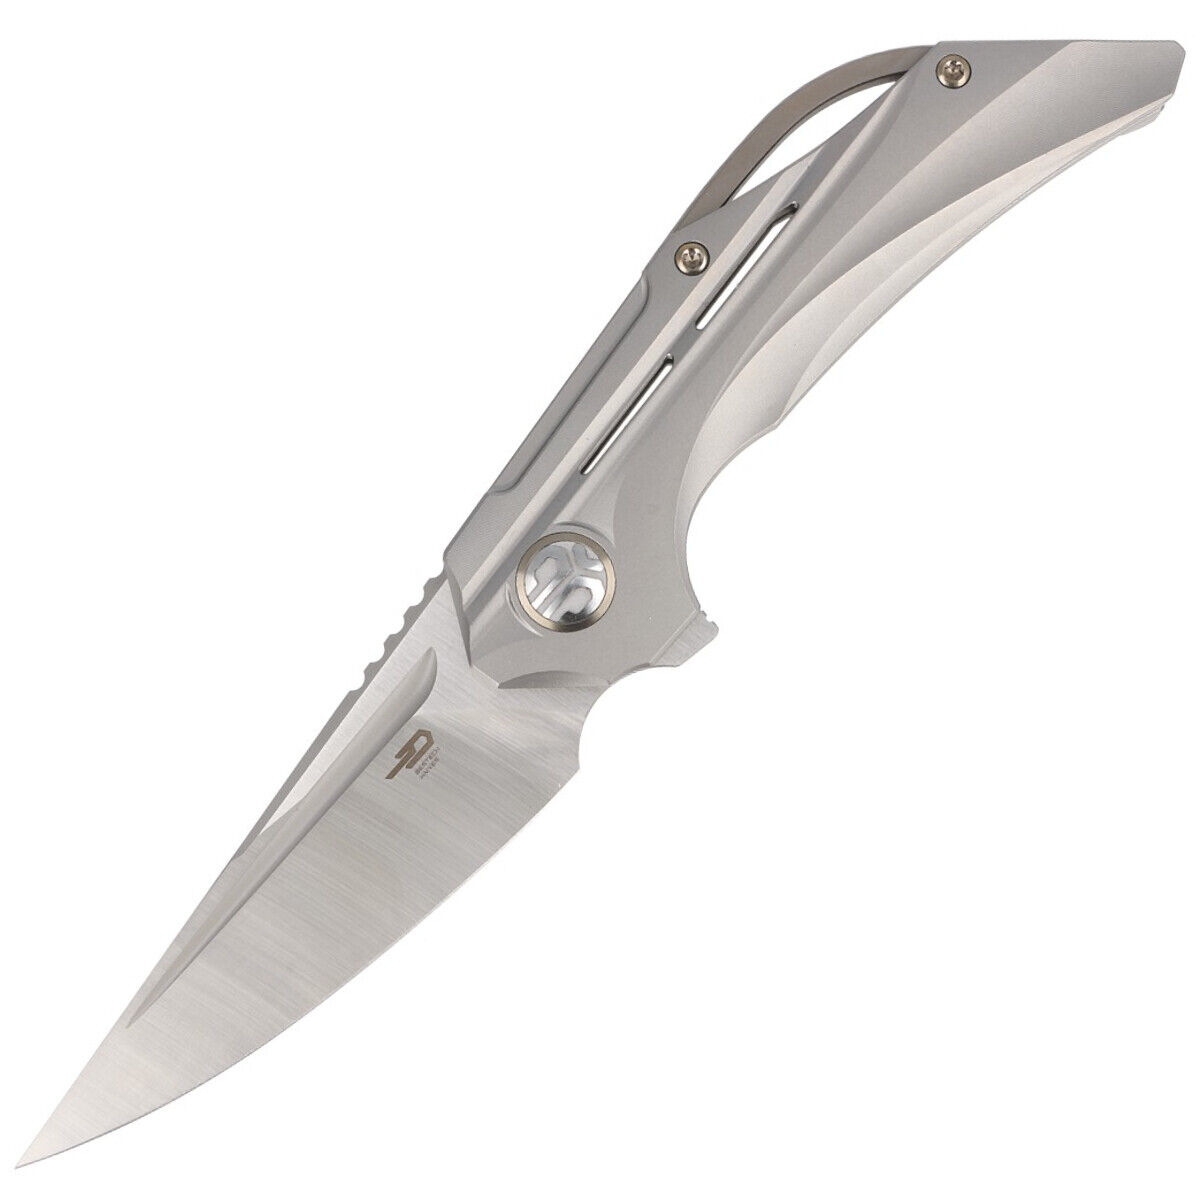 Bestech Knife Vigil Grey Titanium, Satin M390 by Kombou (BT2201A)